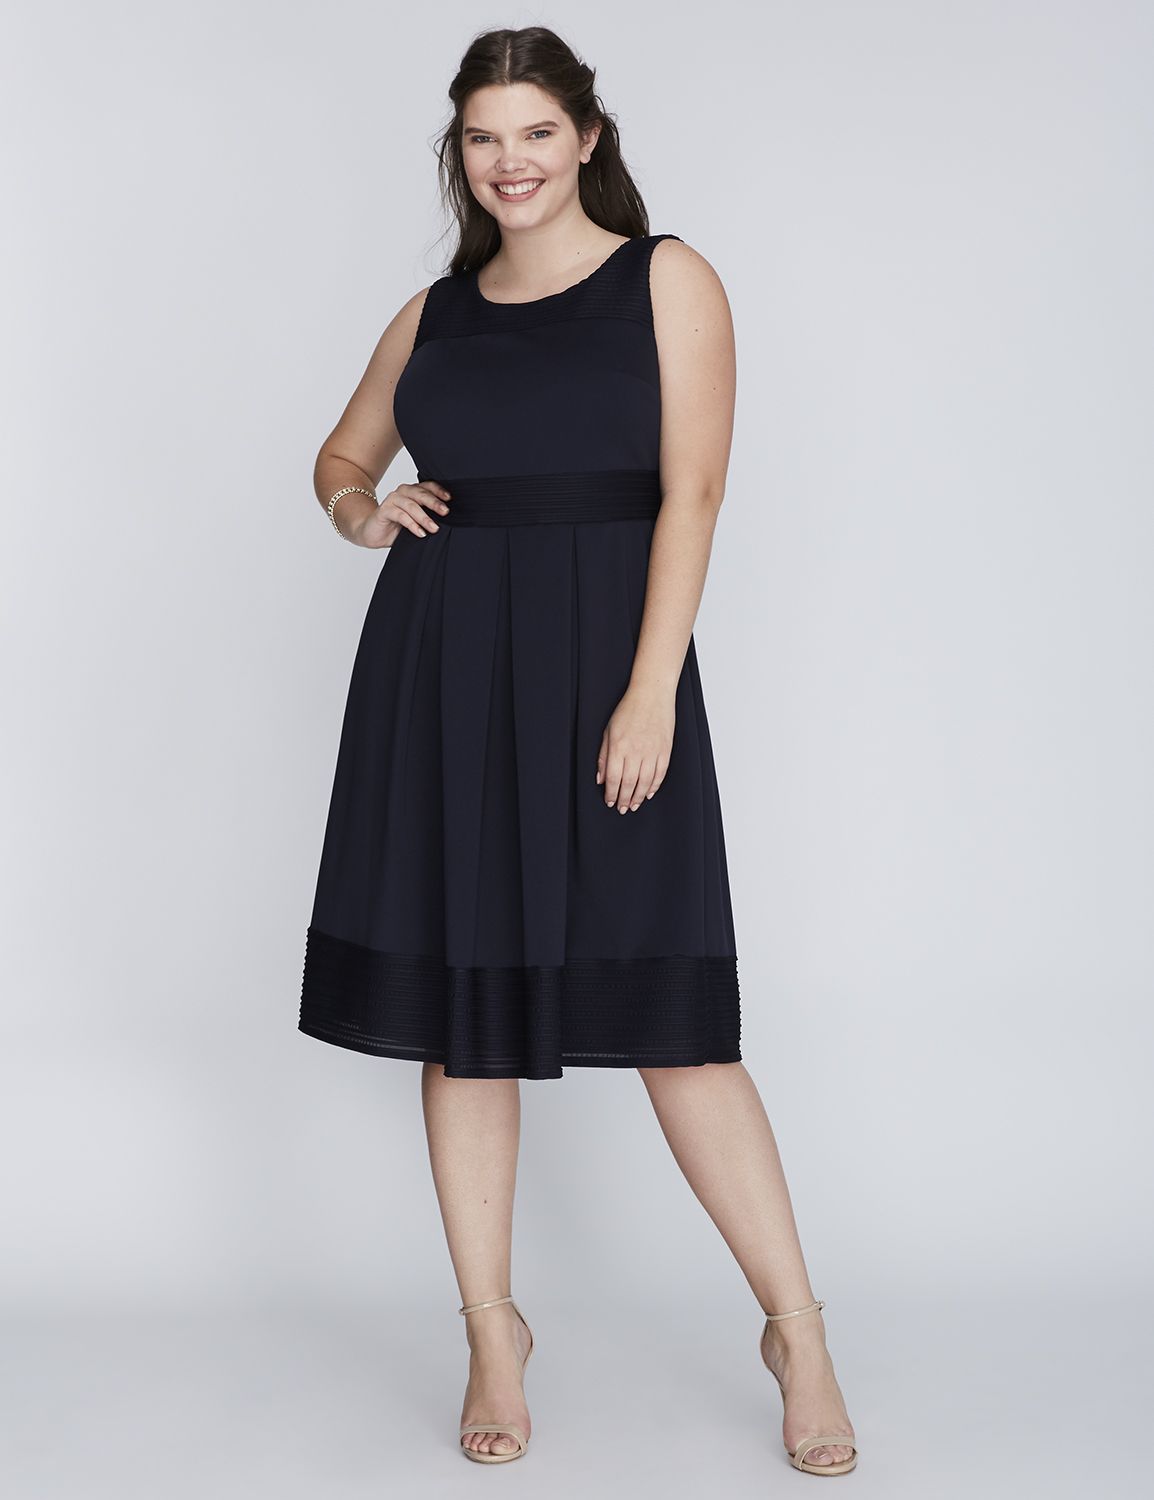 Shop Plus Size Dresses - Sizes 14-28 | Lane Bryant